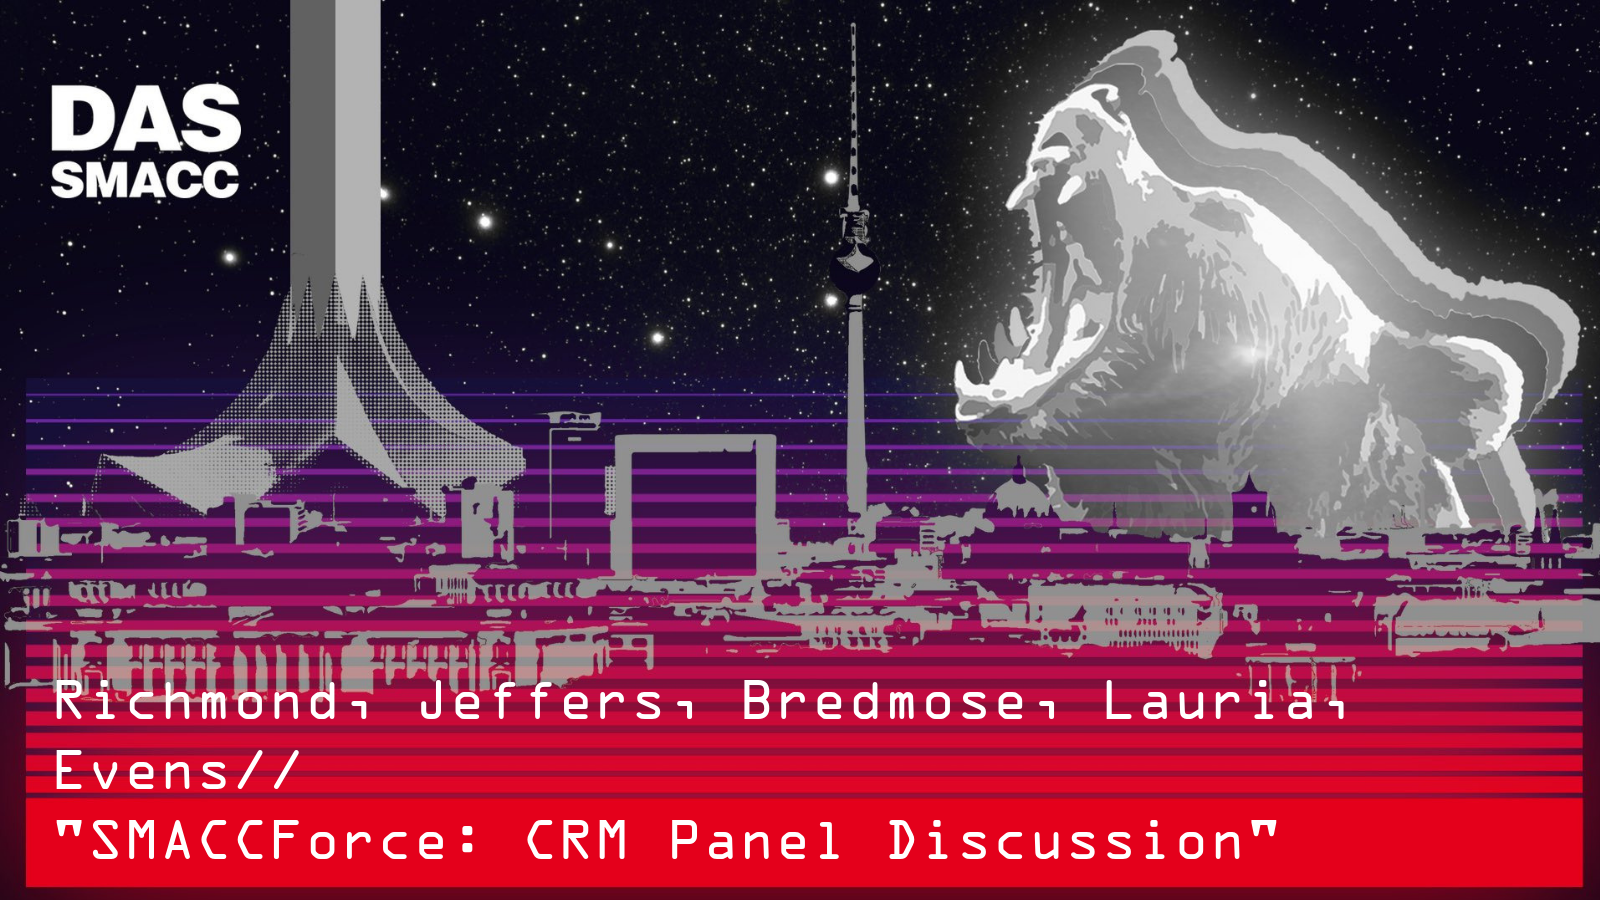 CRM Panel